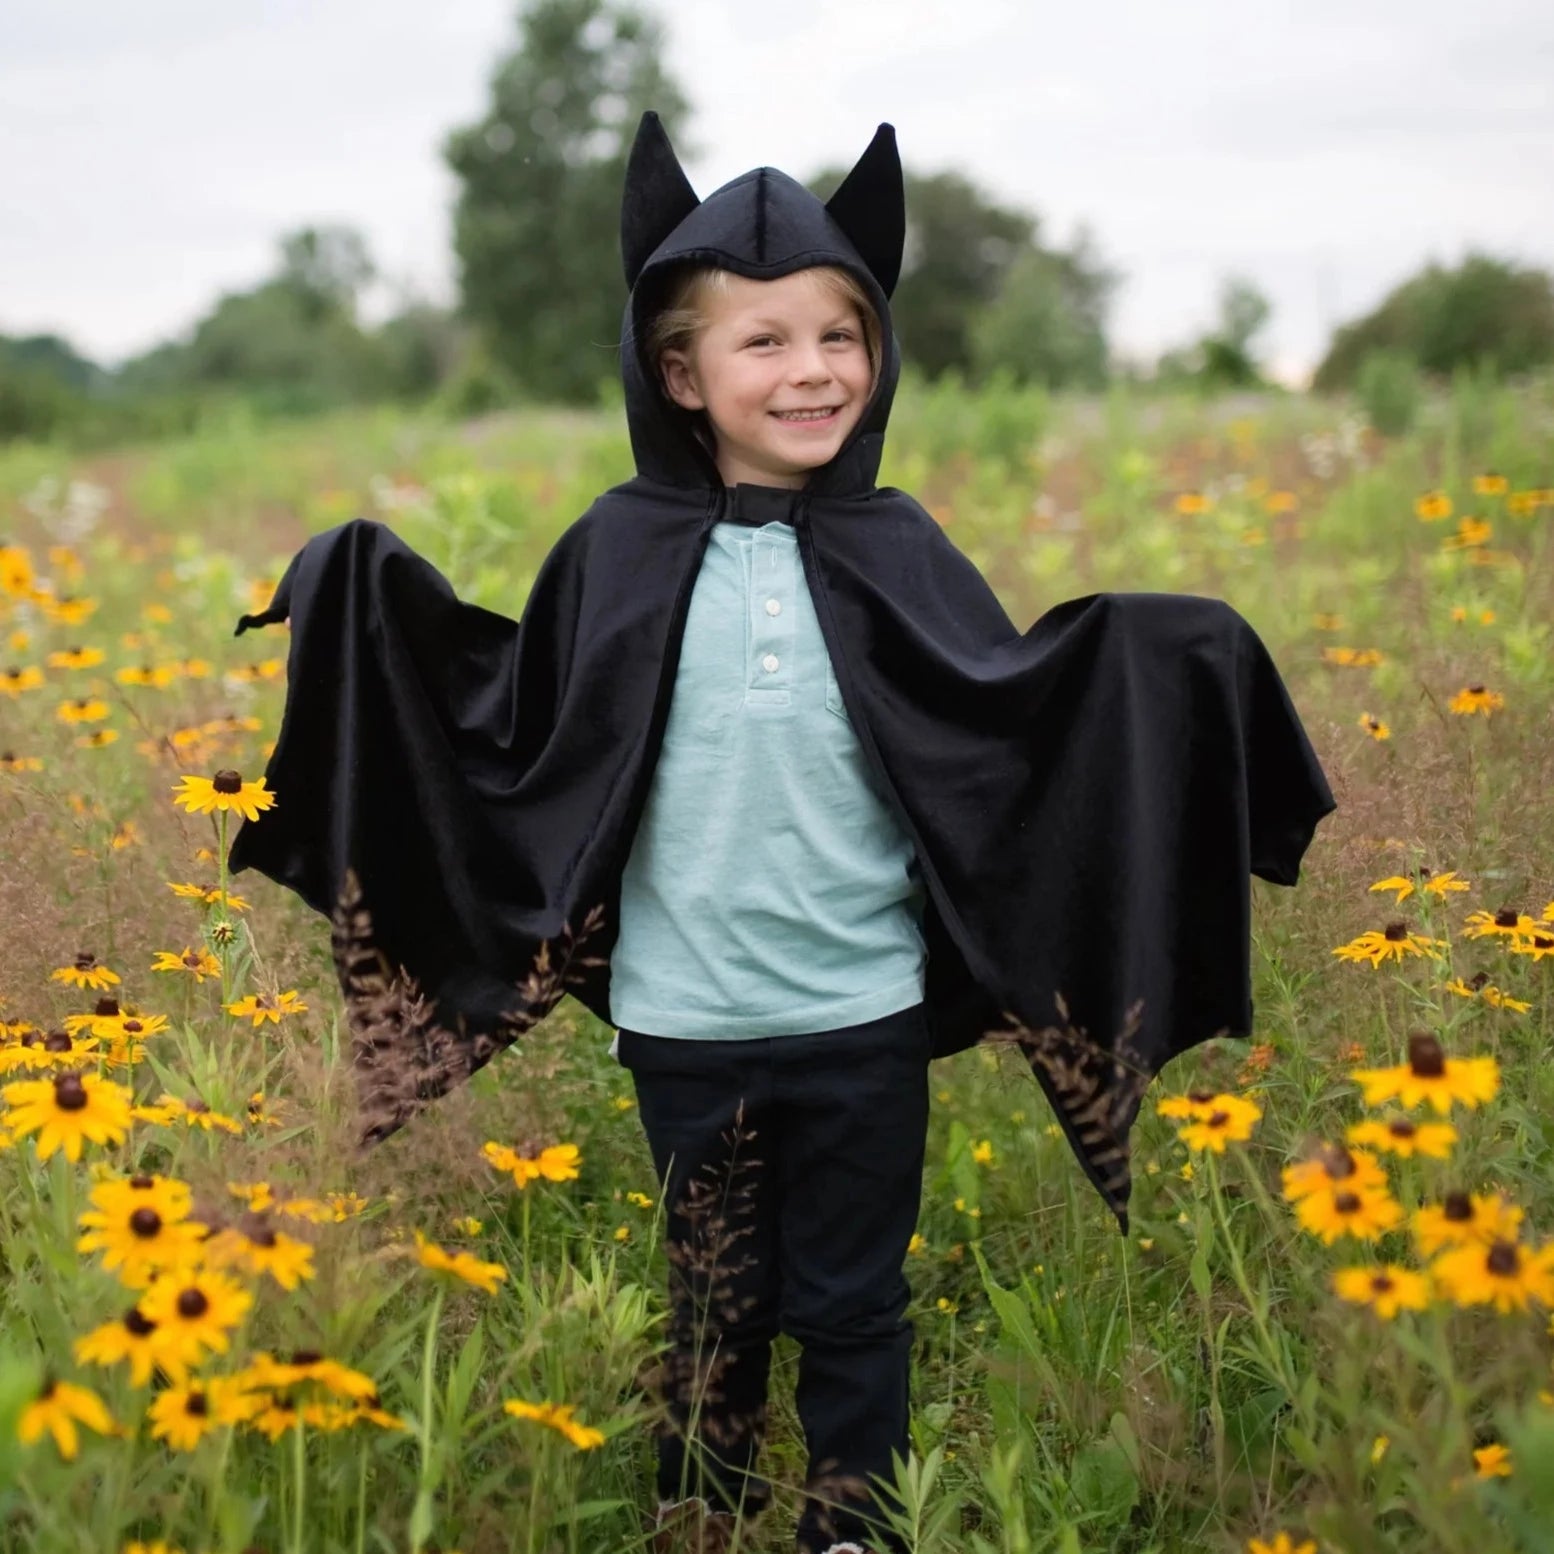 Fledermaus Umhang mit Fledermausohren an der Kapuze / Fledermaus Kostüm Batman